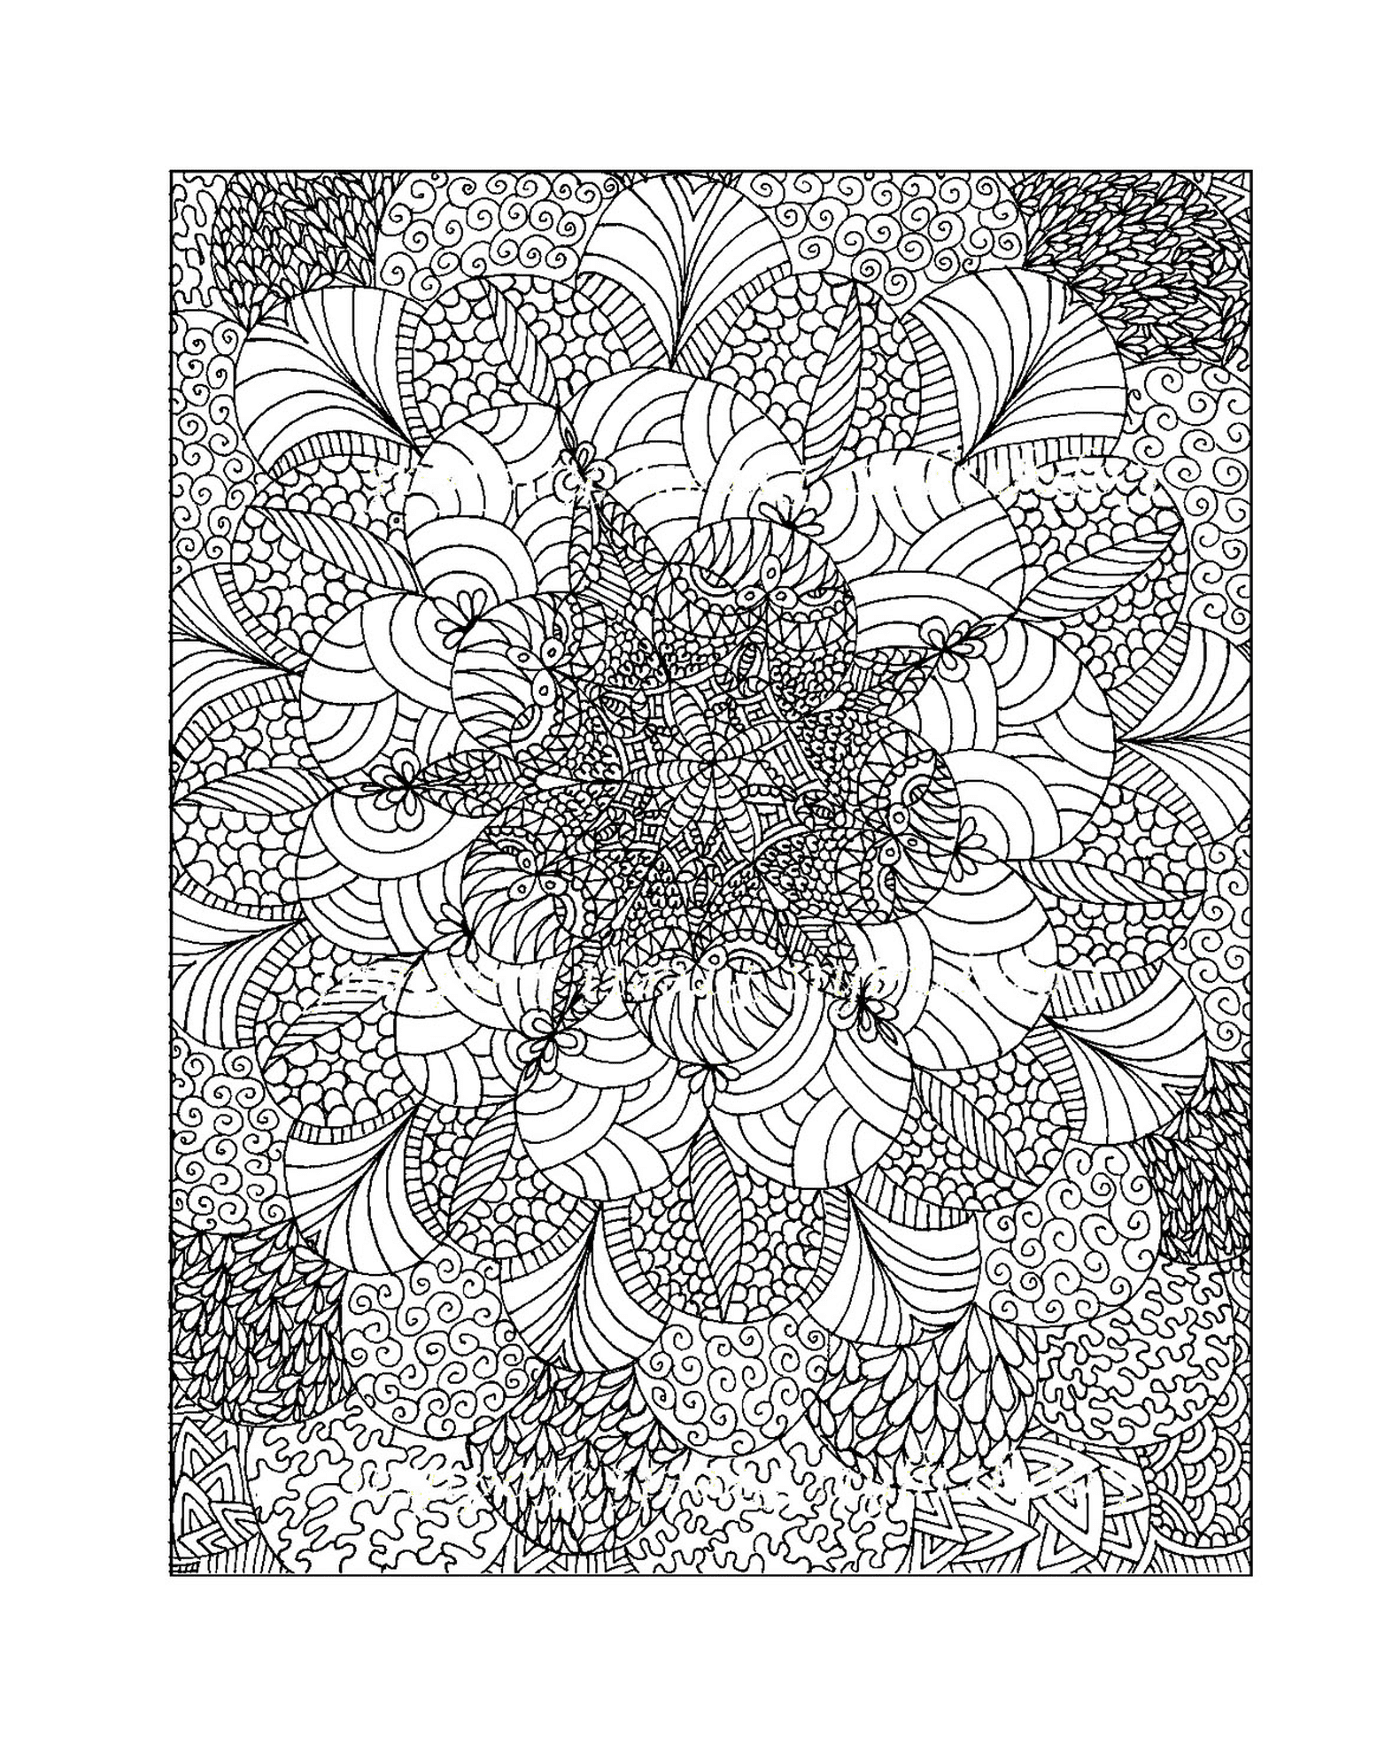  Dibujo de flores complejas 